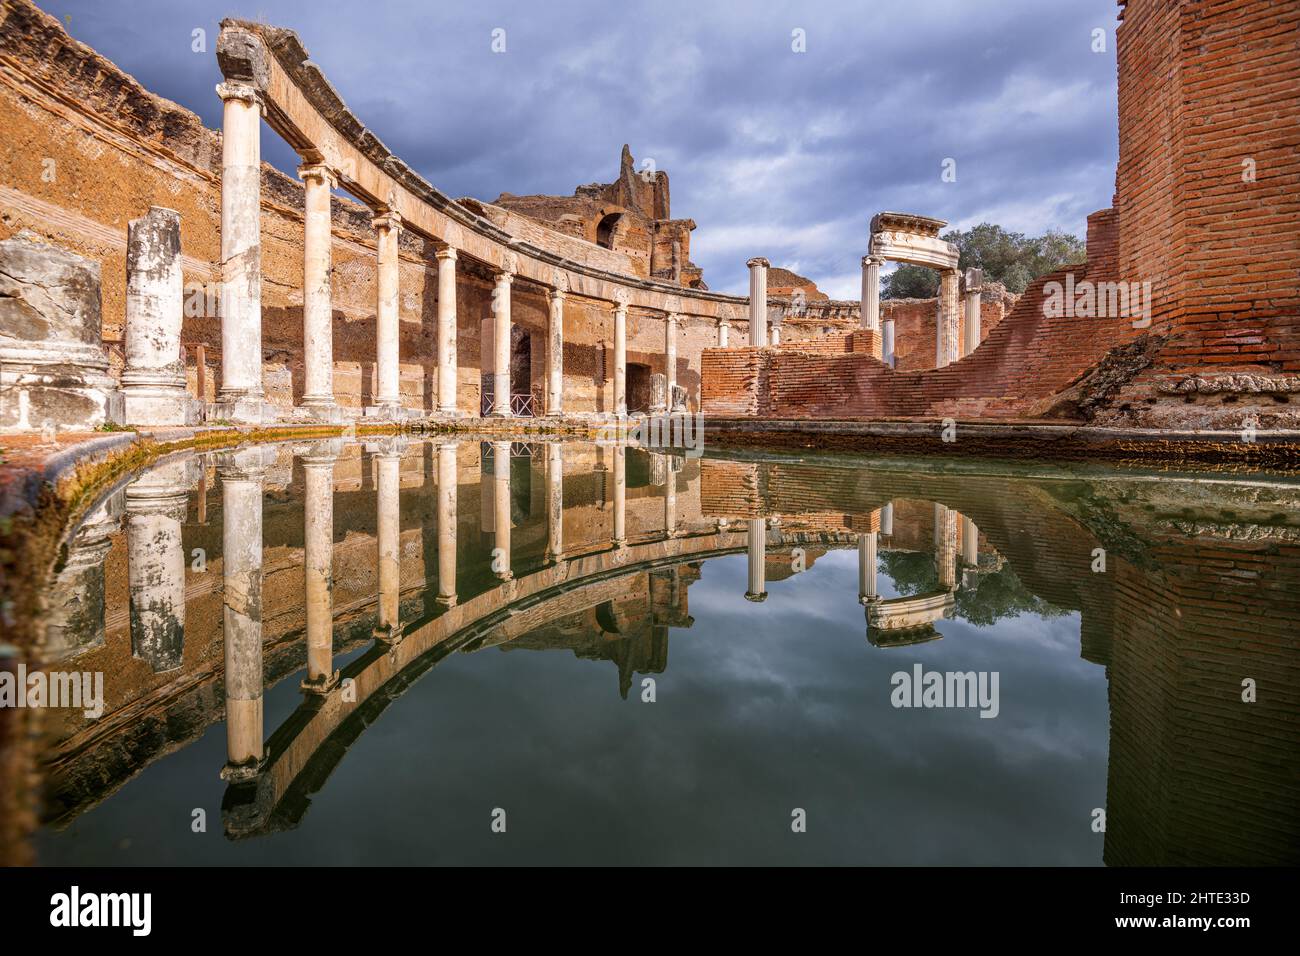 The 'Maritime Theater' at the historic villa of Emperor Hadrian in Tivoli, Italy. Stock Photo